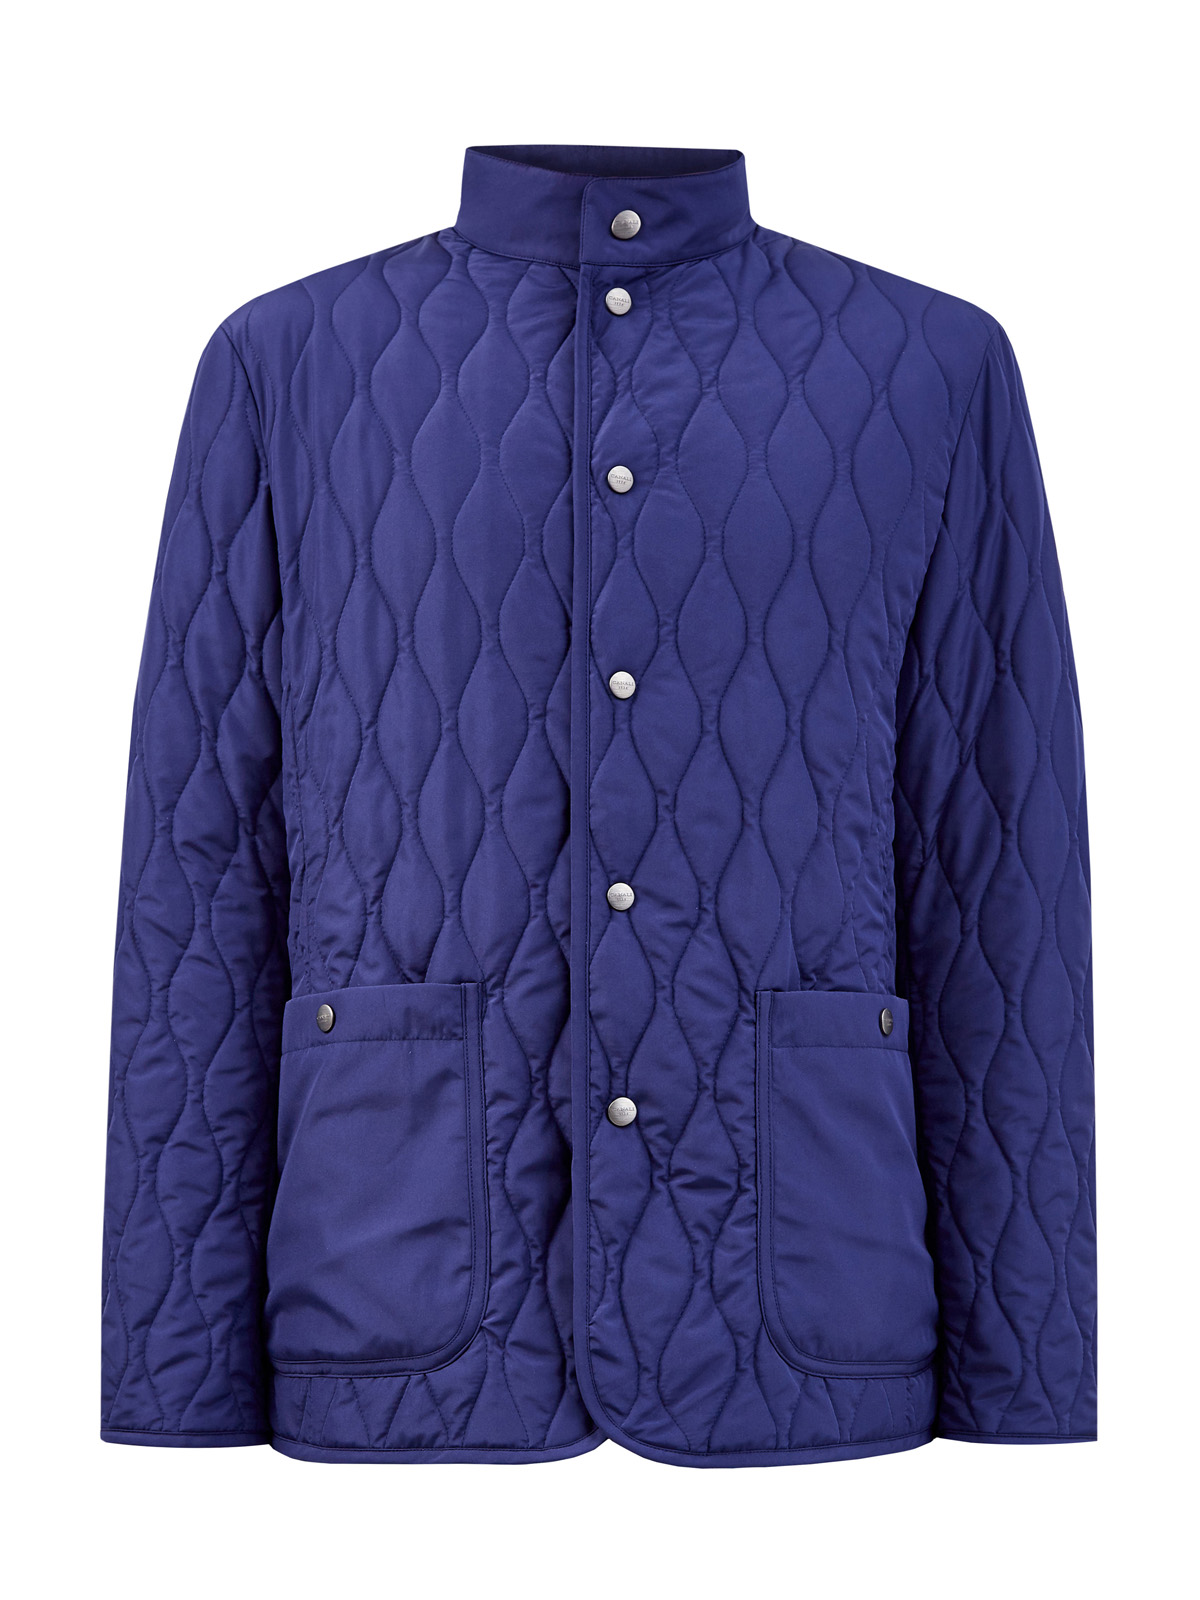 Стеганая куртка из водонепроницаемого нейлона Rain Protection CANALI, цвет синий, размер 52;54;56;58;50